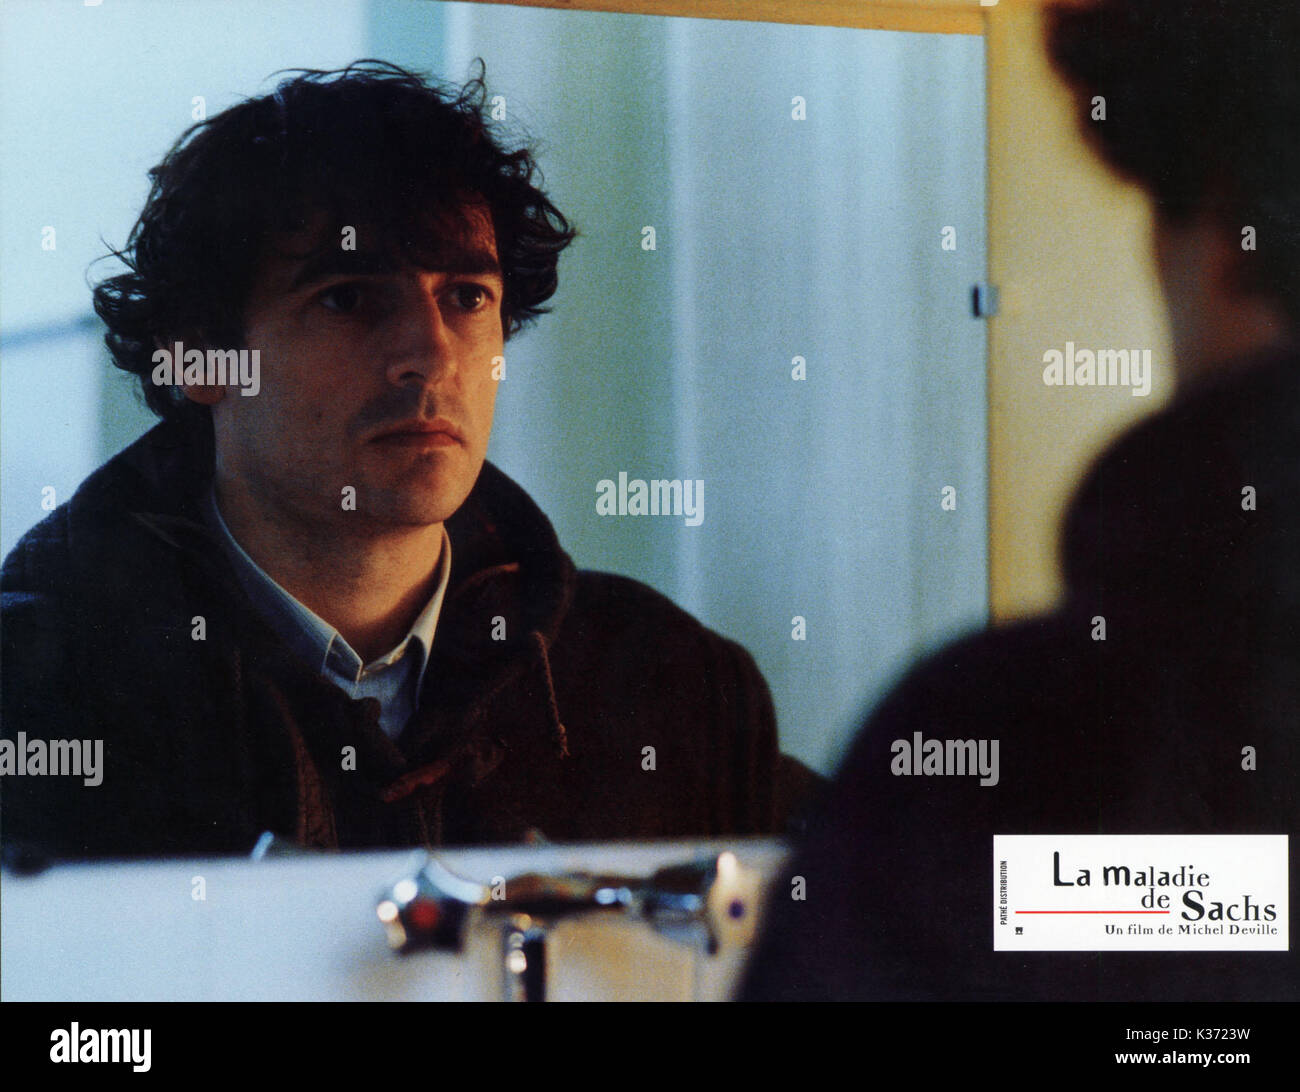 LA MALADIE DE SACHS ALBERT DUPONTEL A PATHE FILM     Date: 1999 Stock Photo